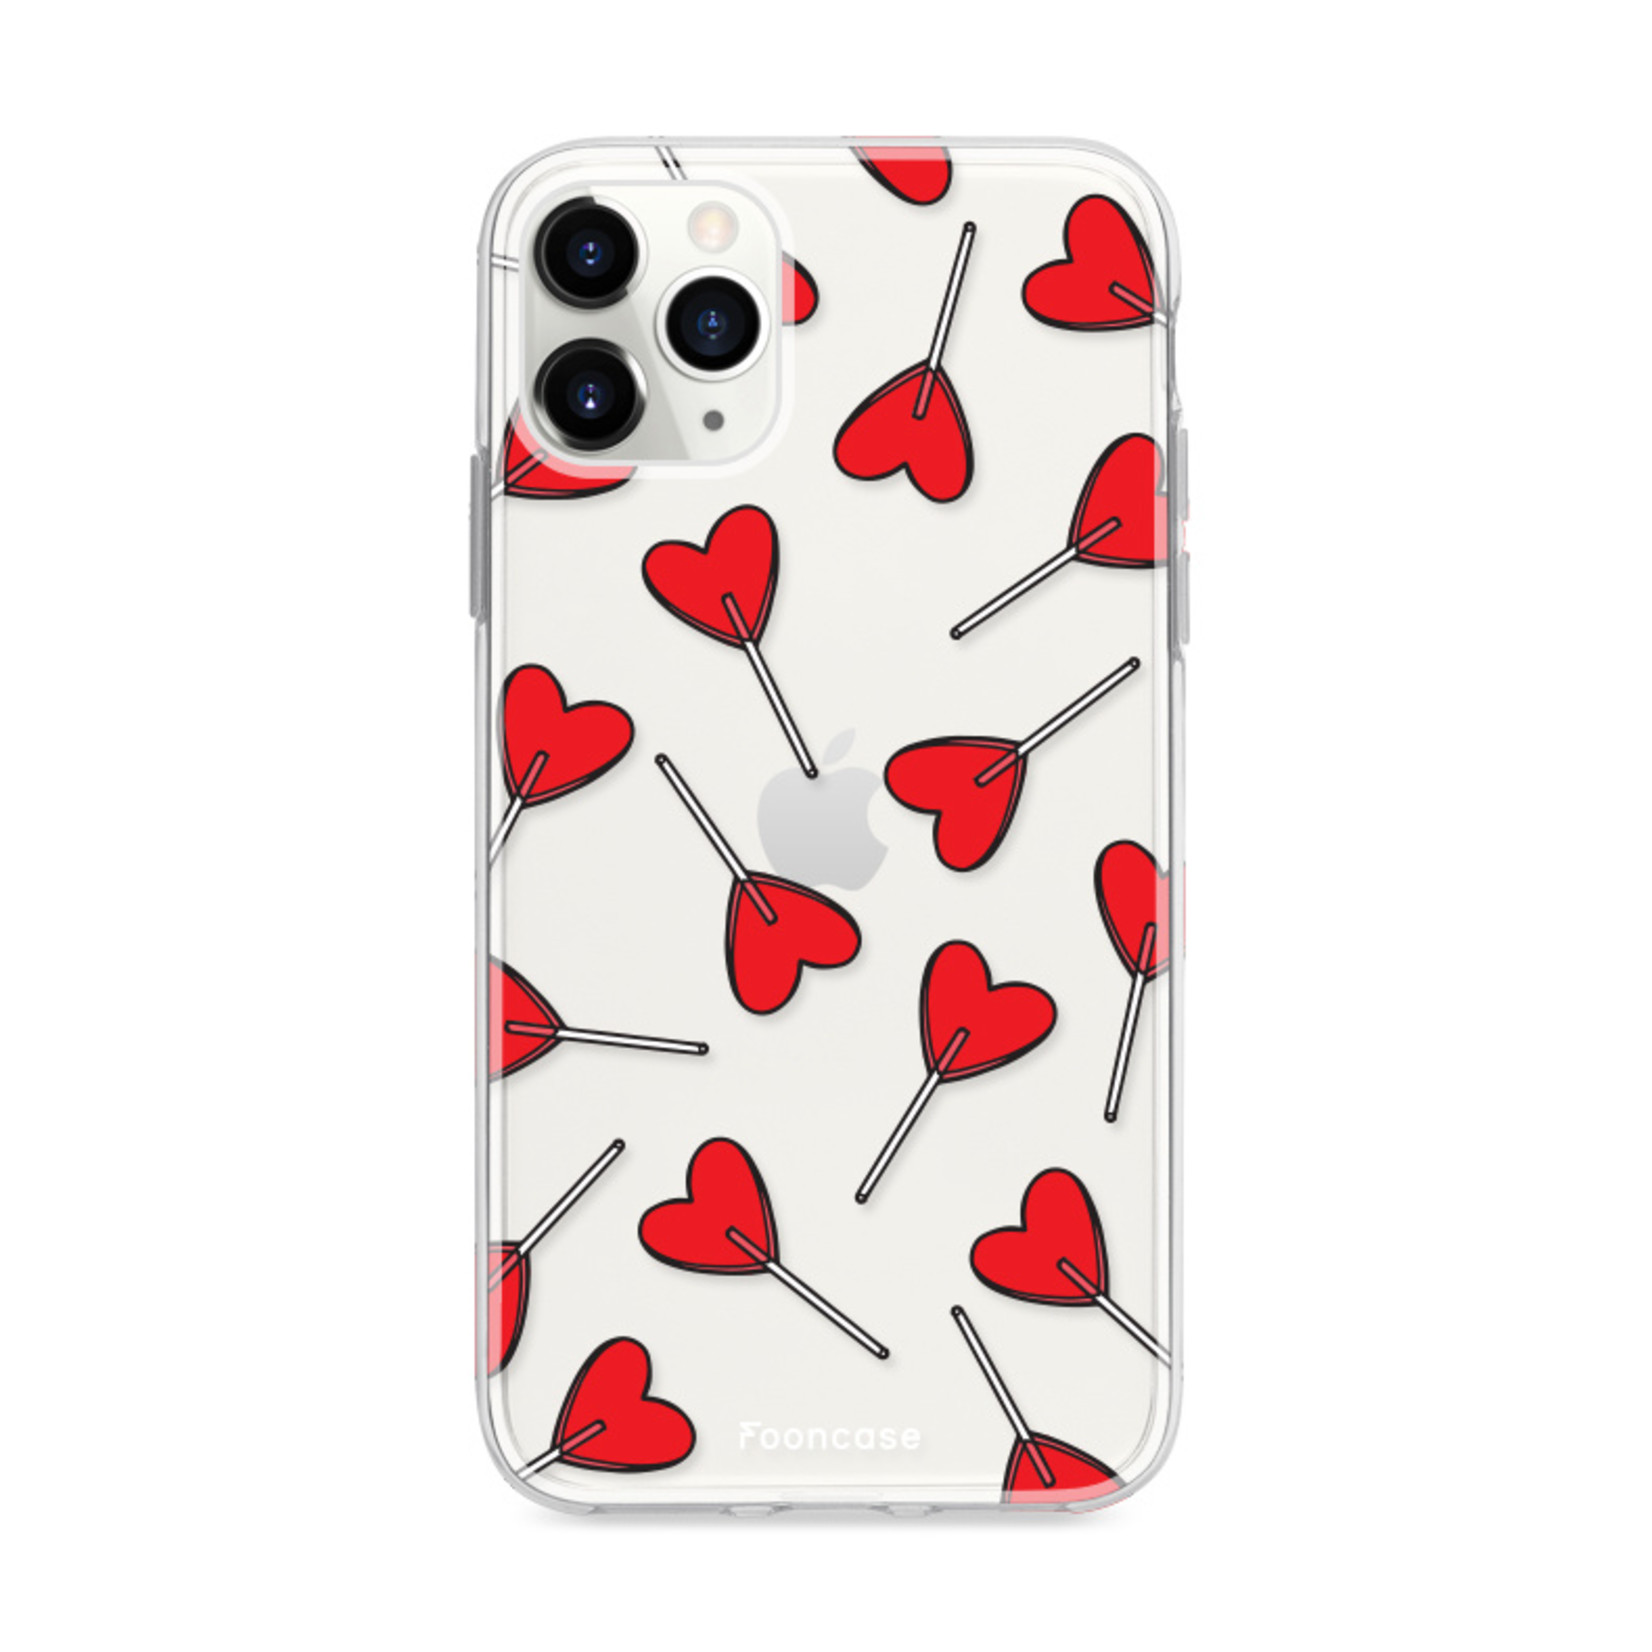 FOONCASE iPhone 11 Pro Max hoesje TPU Soft Case - Back Cover - Love Pop